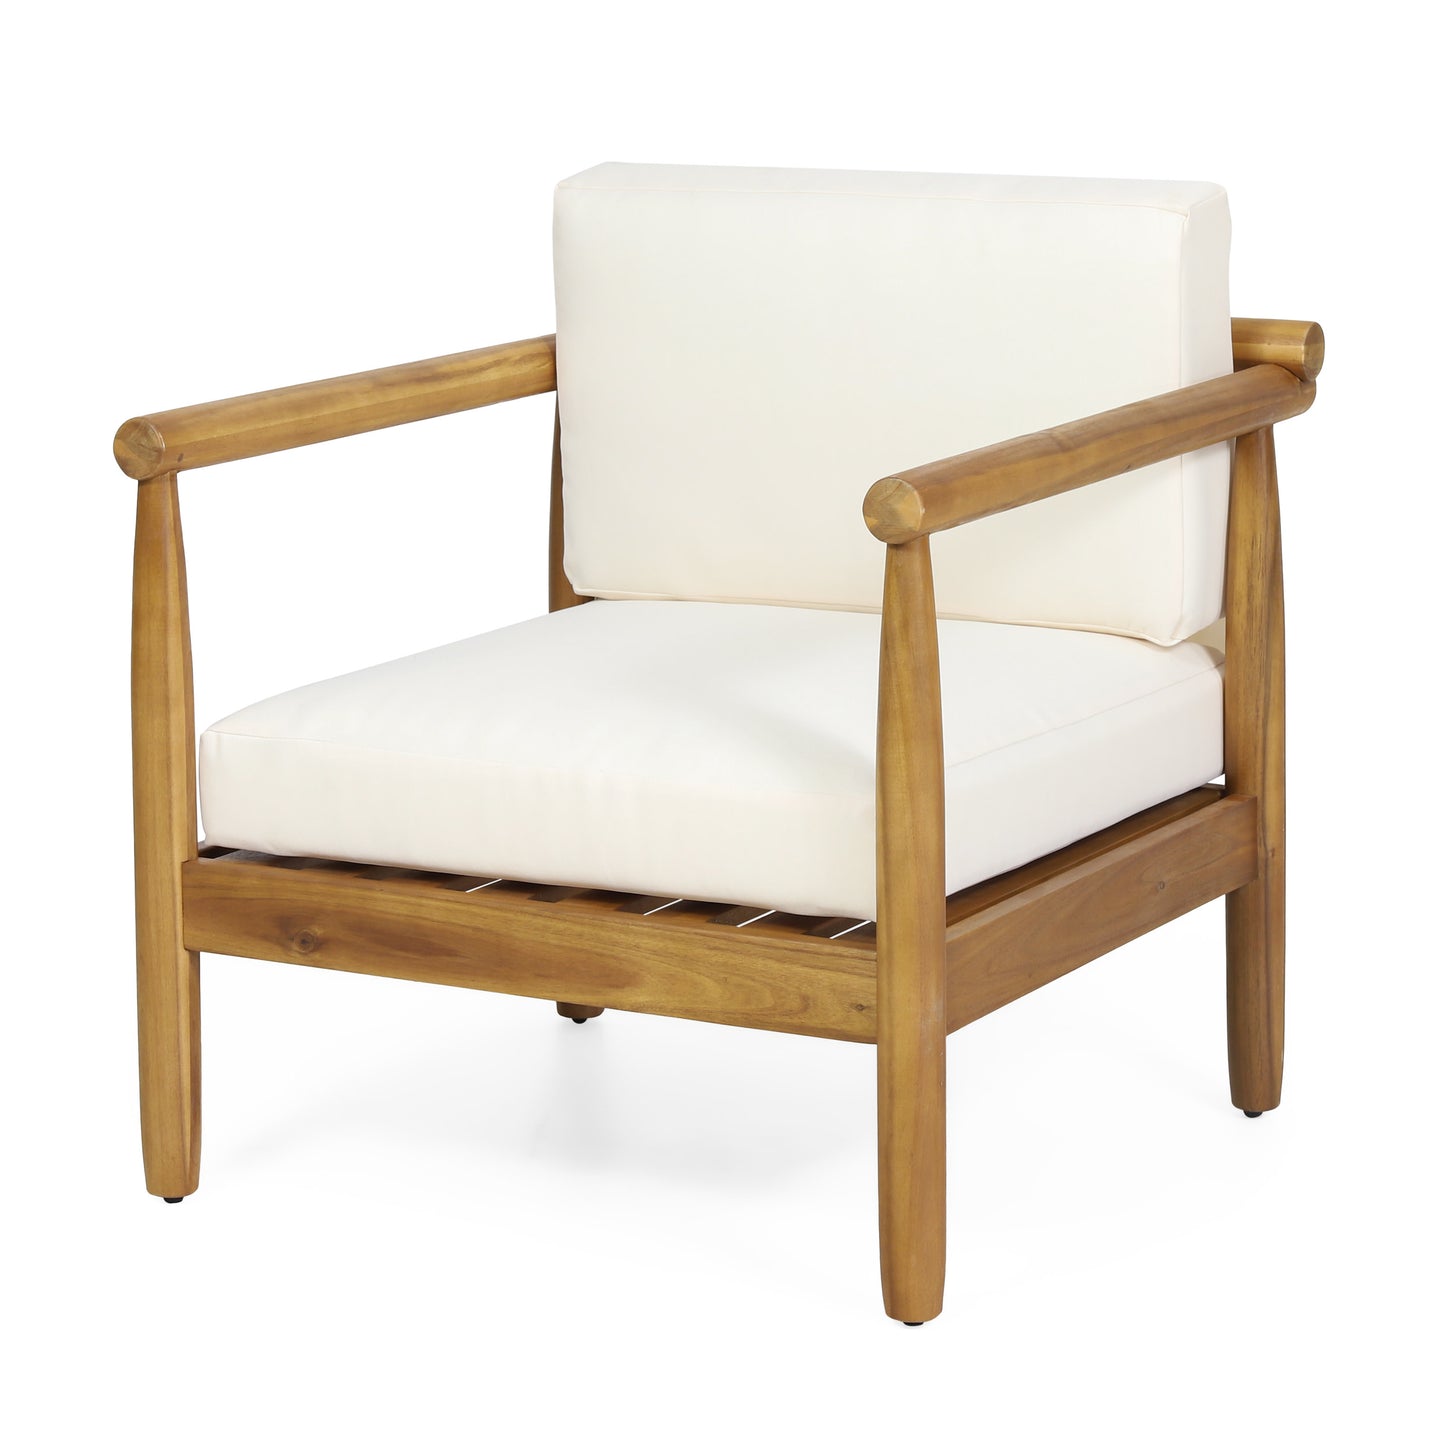 Benewah Outdoor Acacia Wood Club Chair with Cushions, Teak and Cream